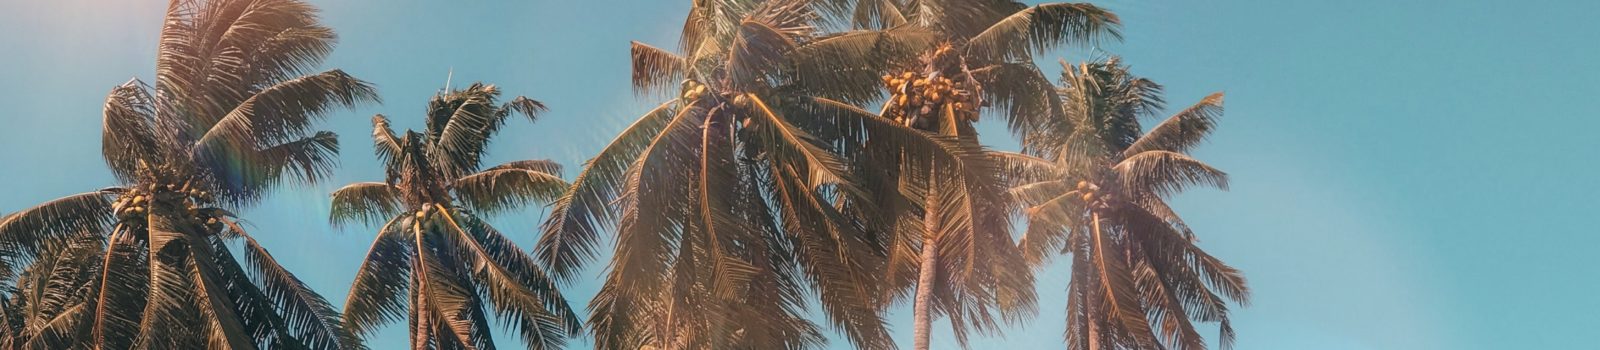 coconut-dawn-daylight-exotic-1152359